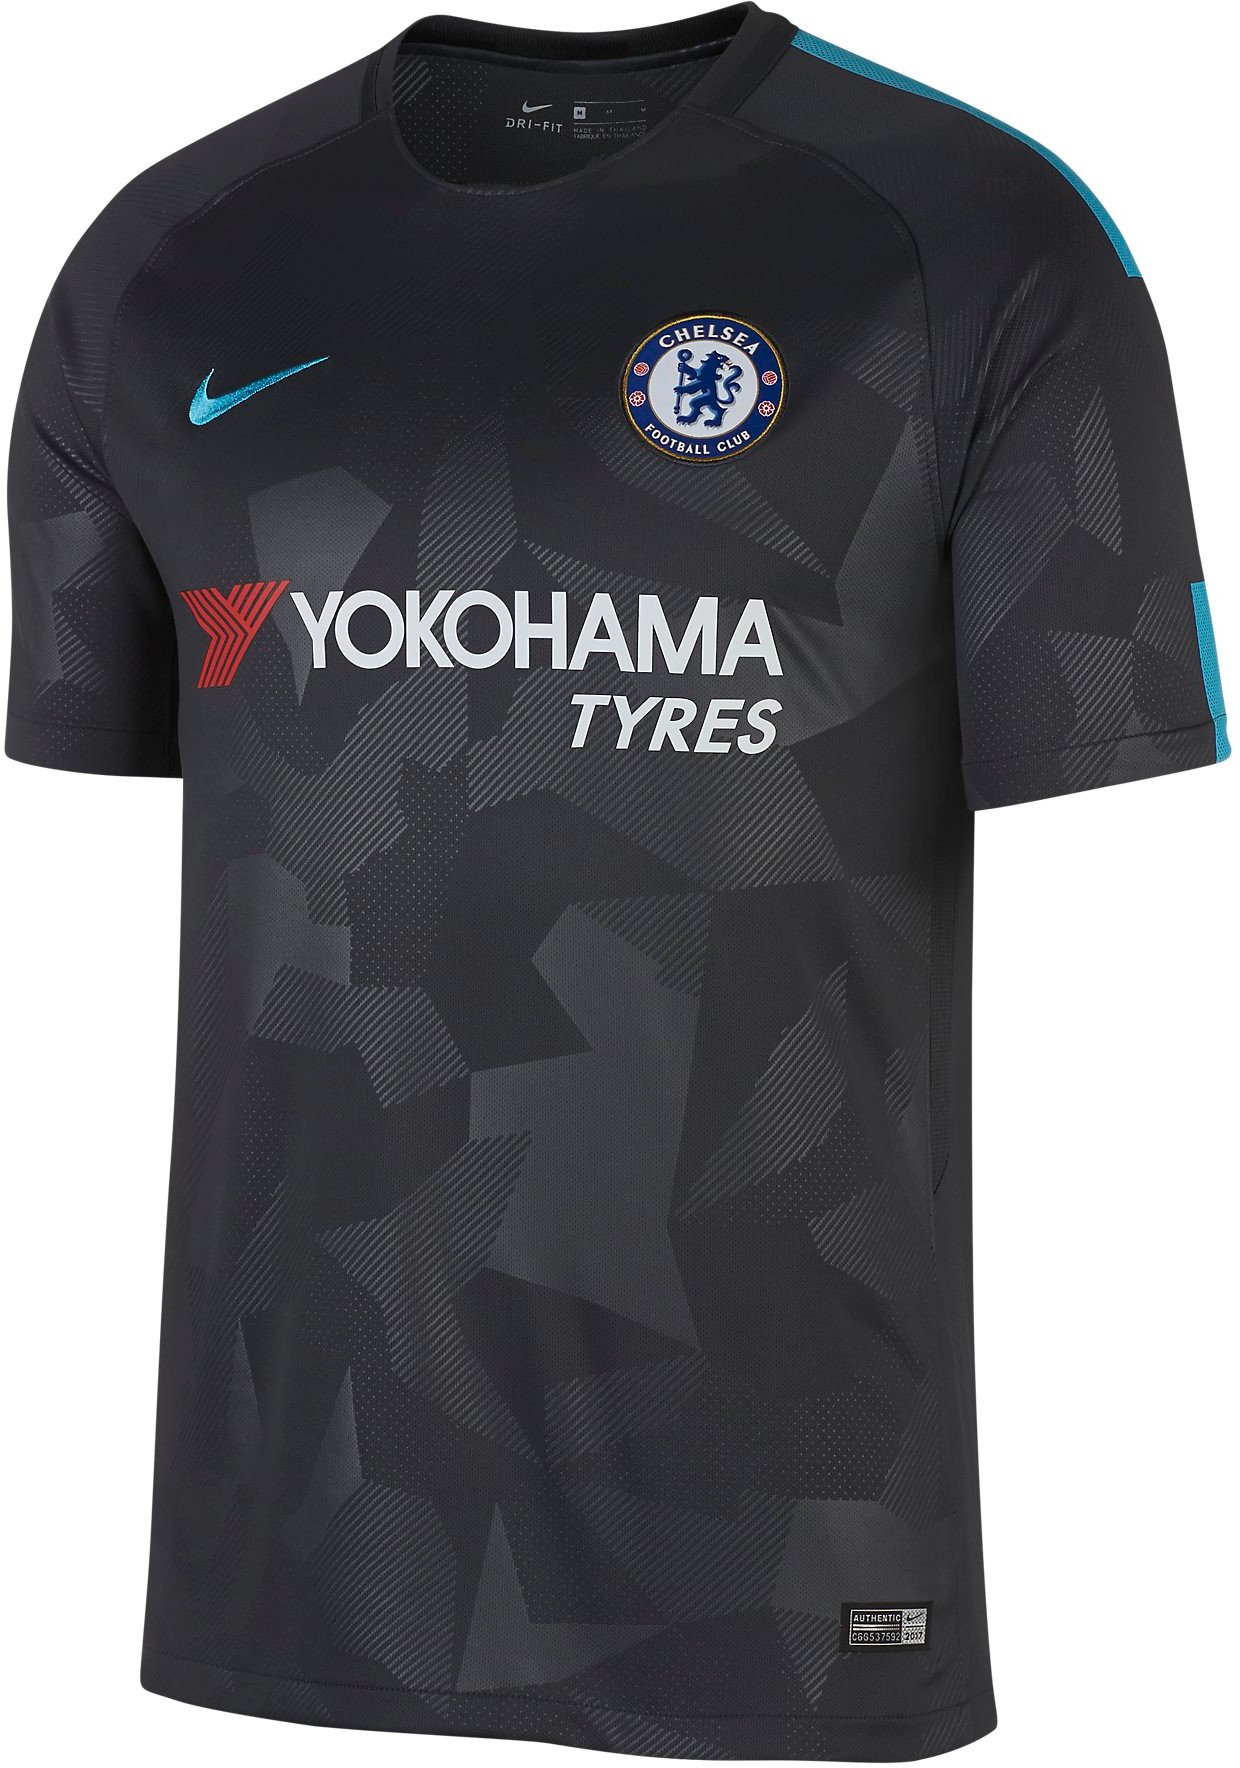 Replika pánského fotbalového dresu Nike Chelsea FC 2017/2018